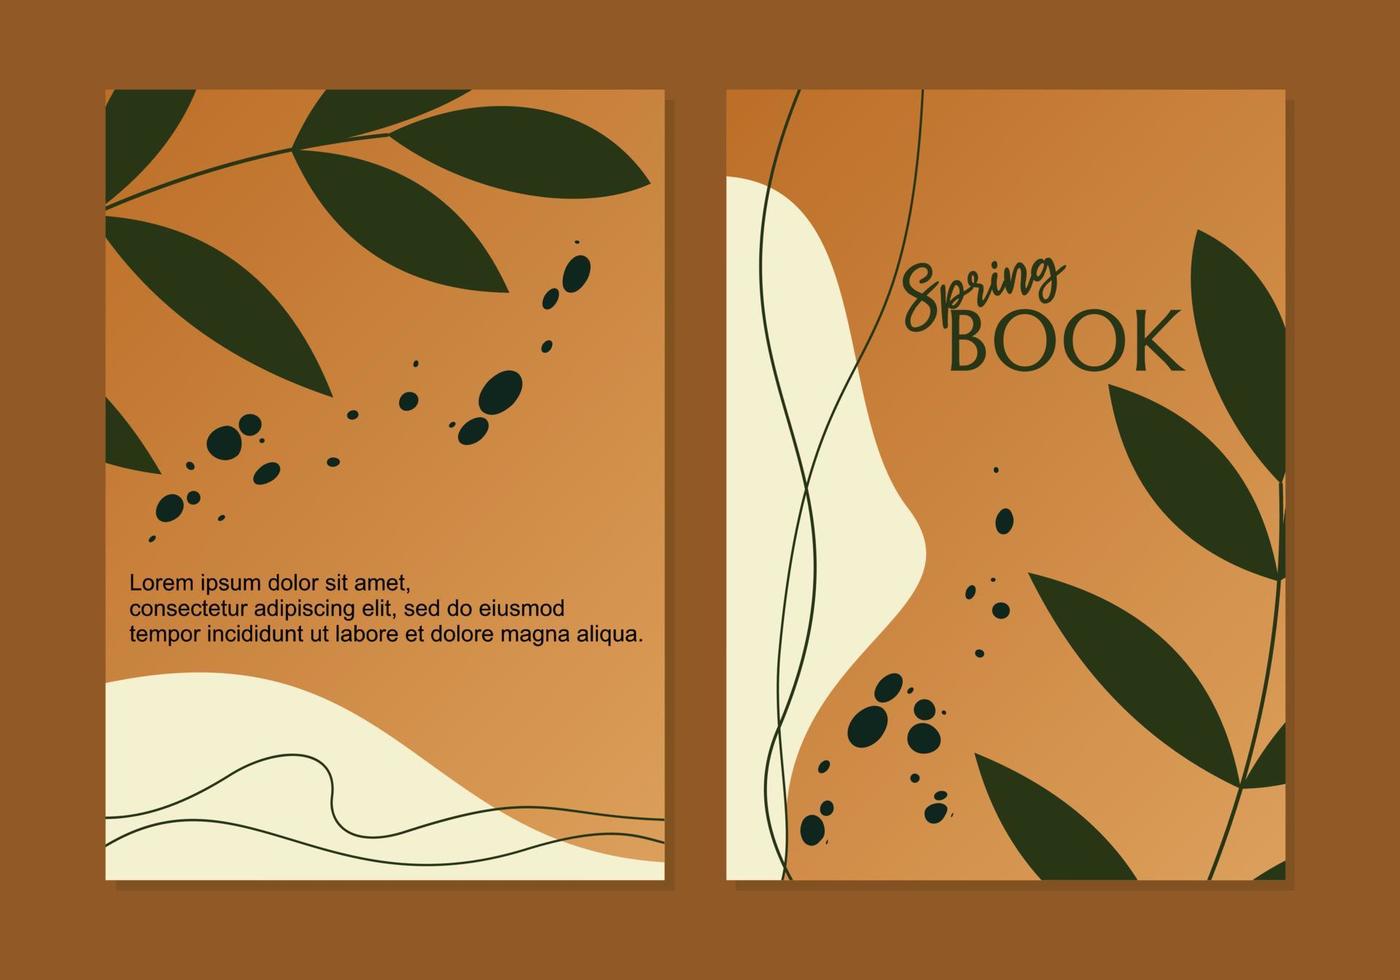 spring book covers template set.botanical floral design. For notebooks, planners, brochures, books, catalogs etc. Vector illustration